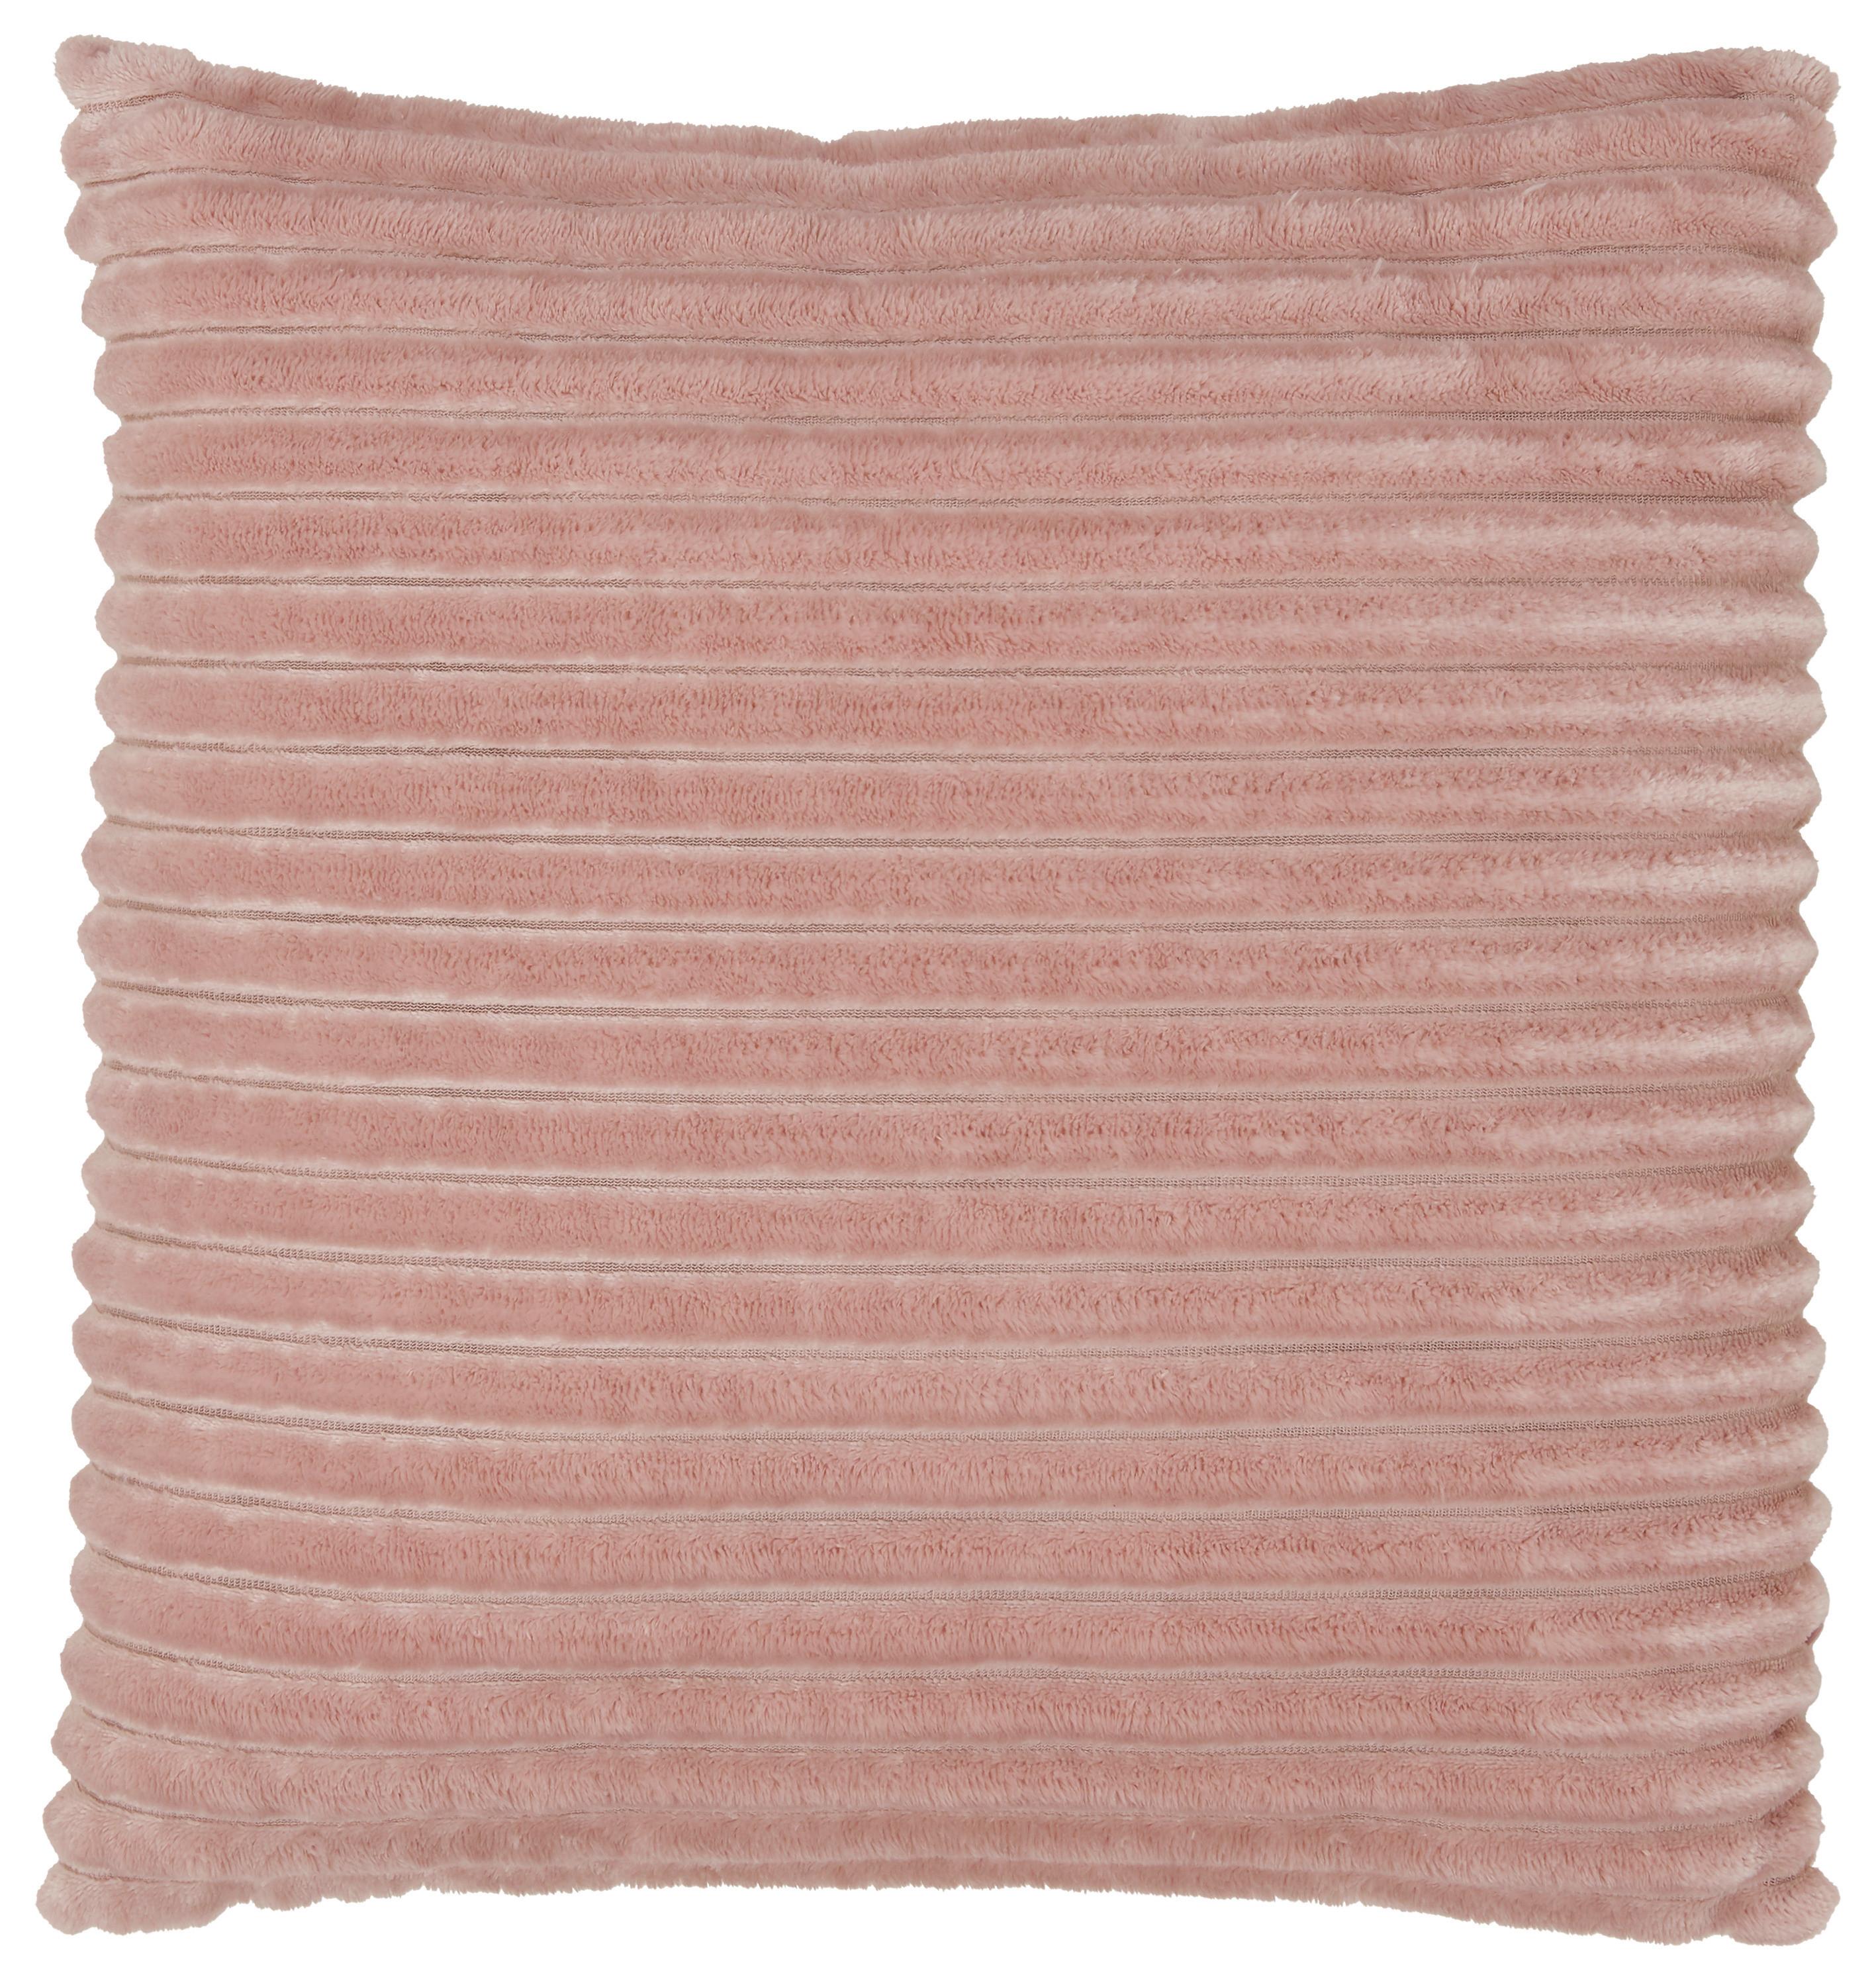 Pernă decorativă Cordi - roz, Konventionell, textil (45/45cm) - Modern Living